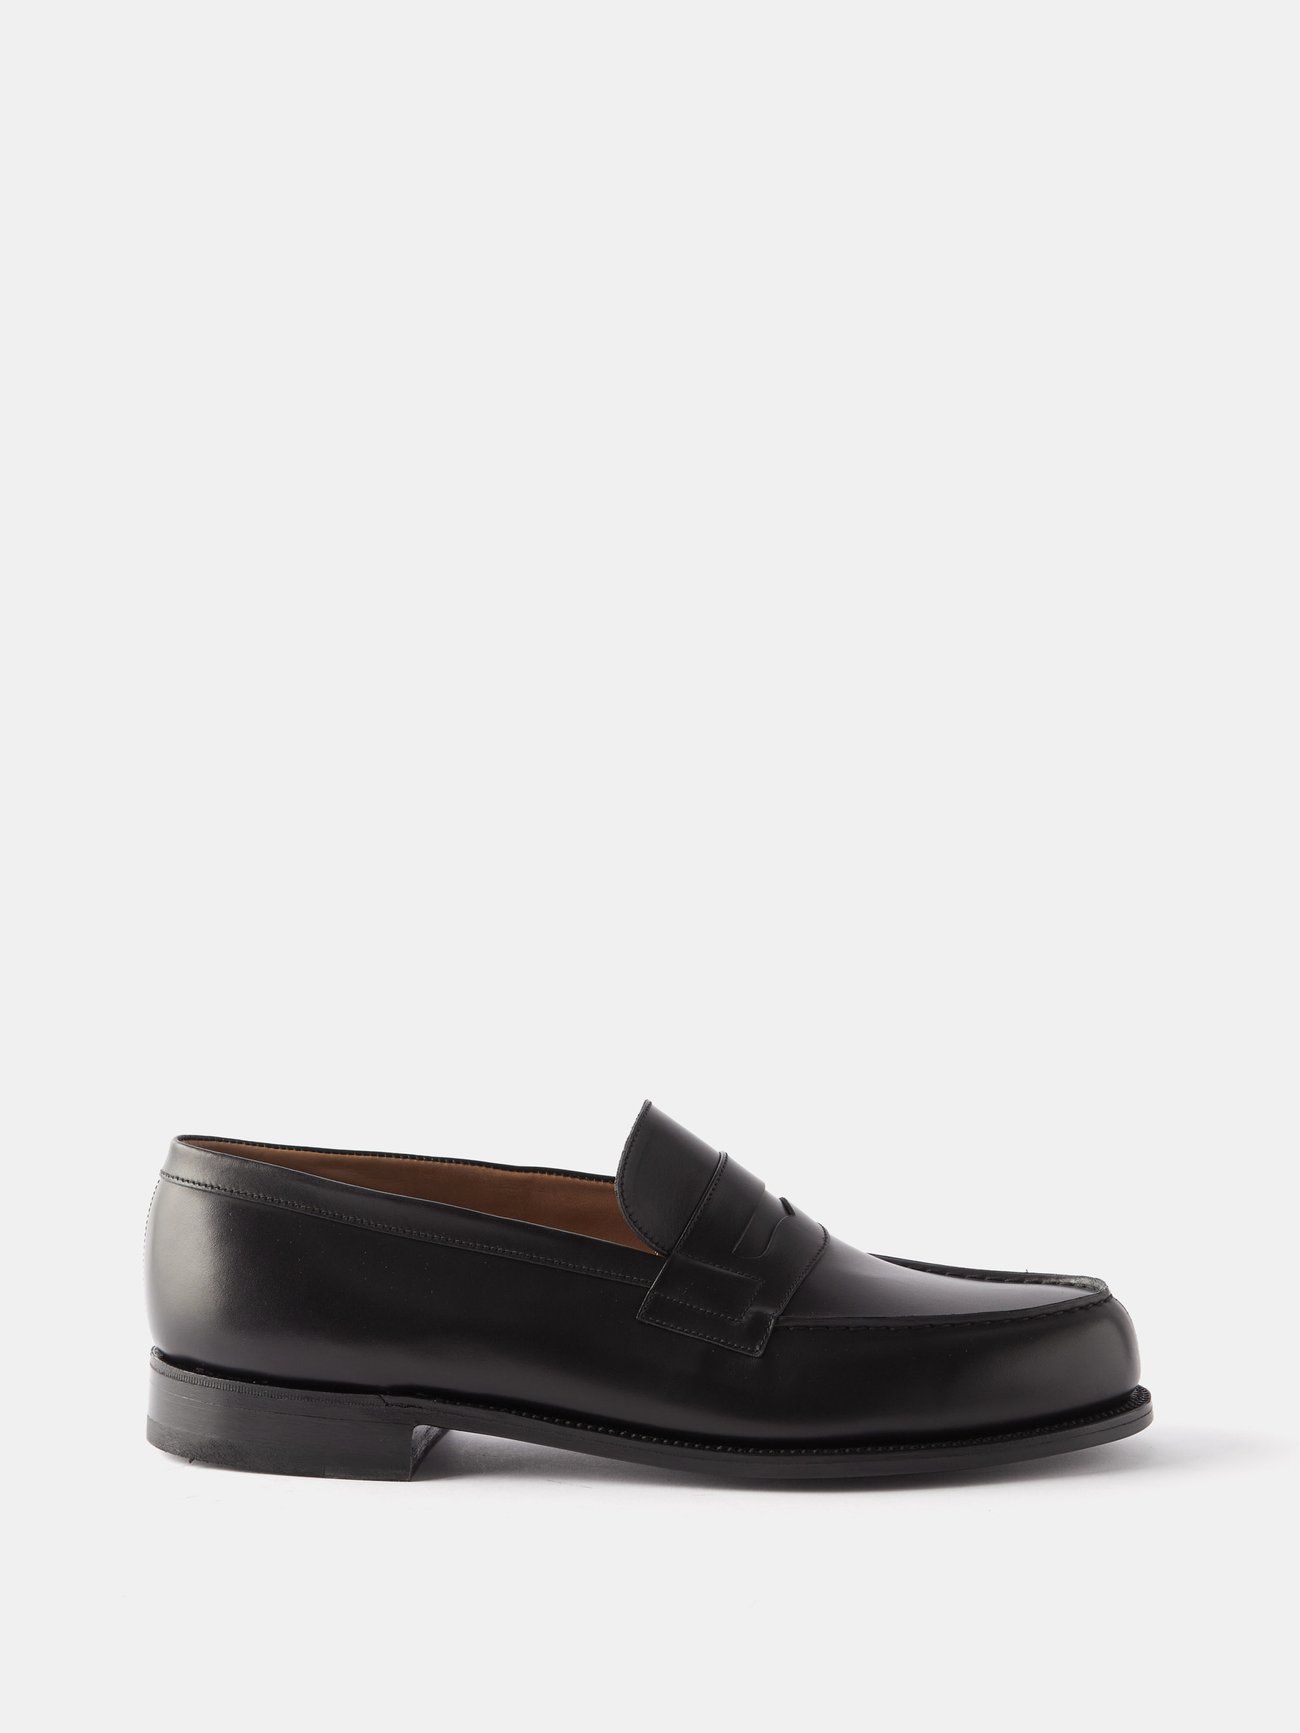 Black 180 leather loafers | J.M. Weston | MATCHES UK